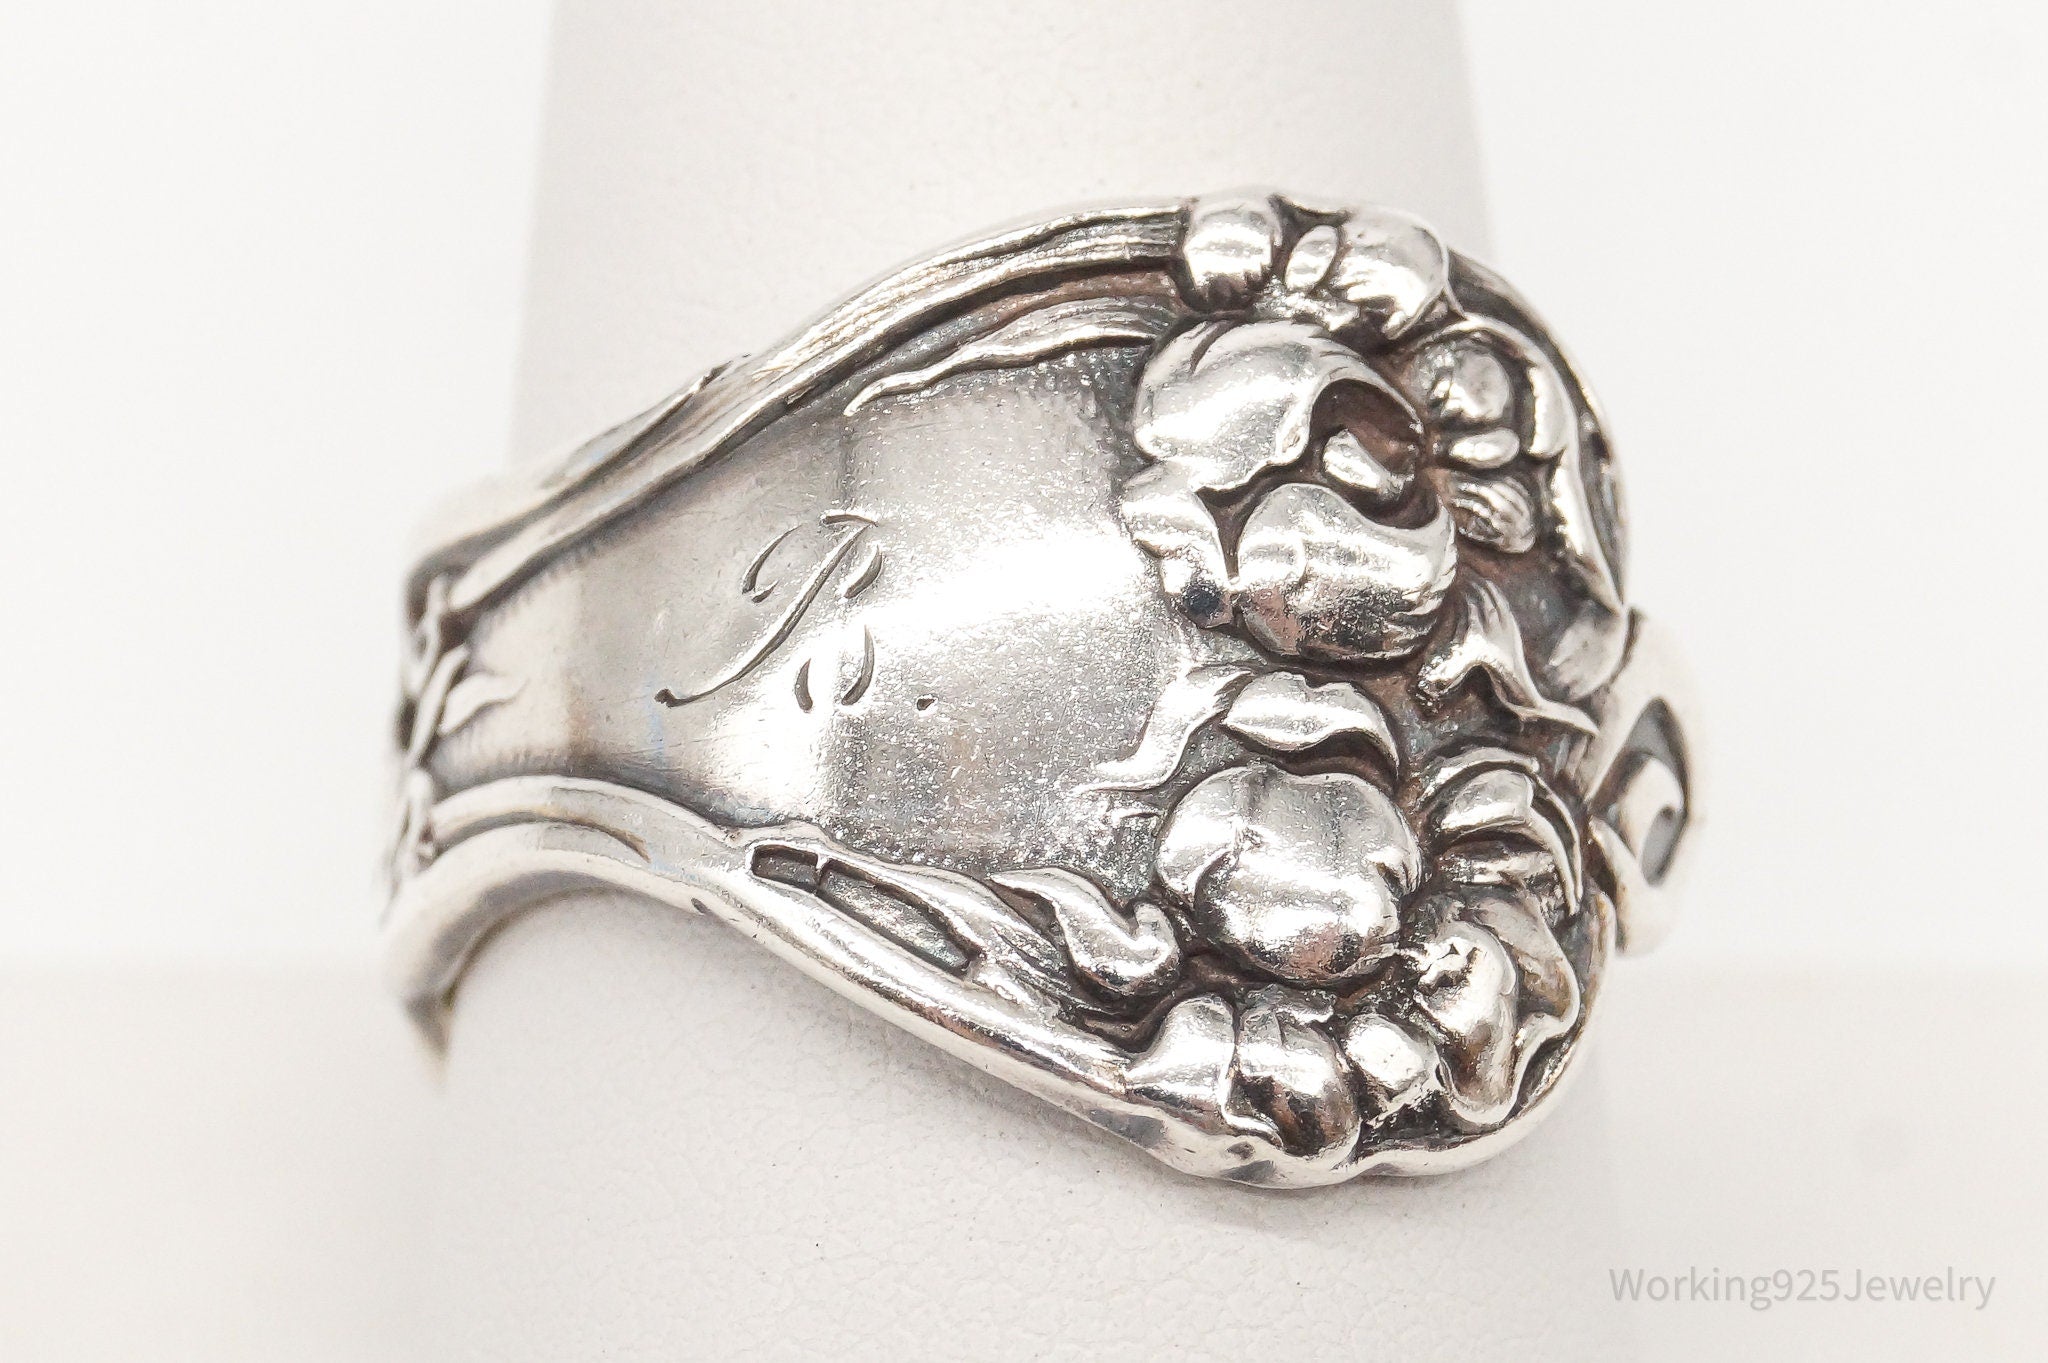 Antique B initial Art Nouveau Silver Spoon Ring Adjustable Size 9.5